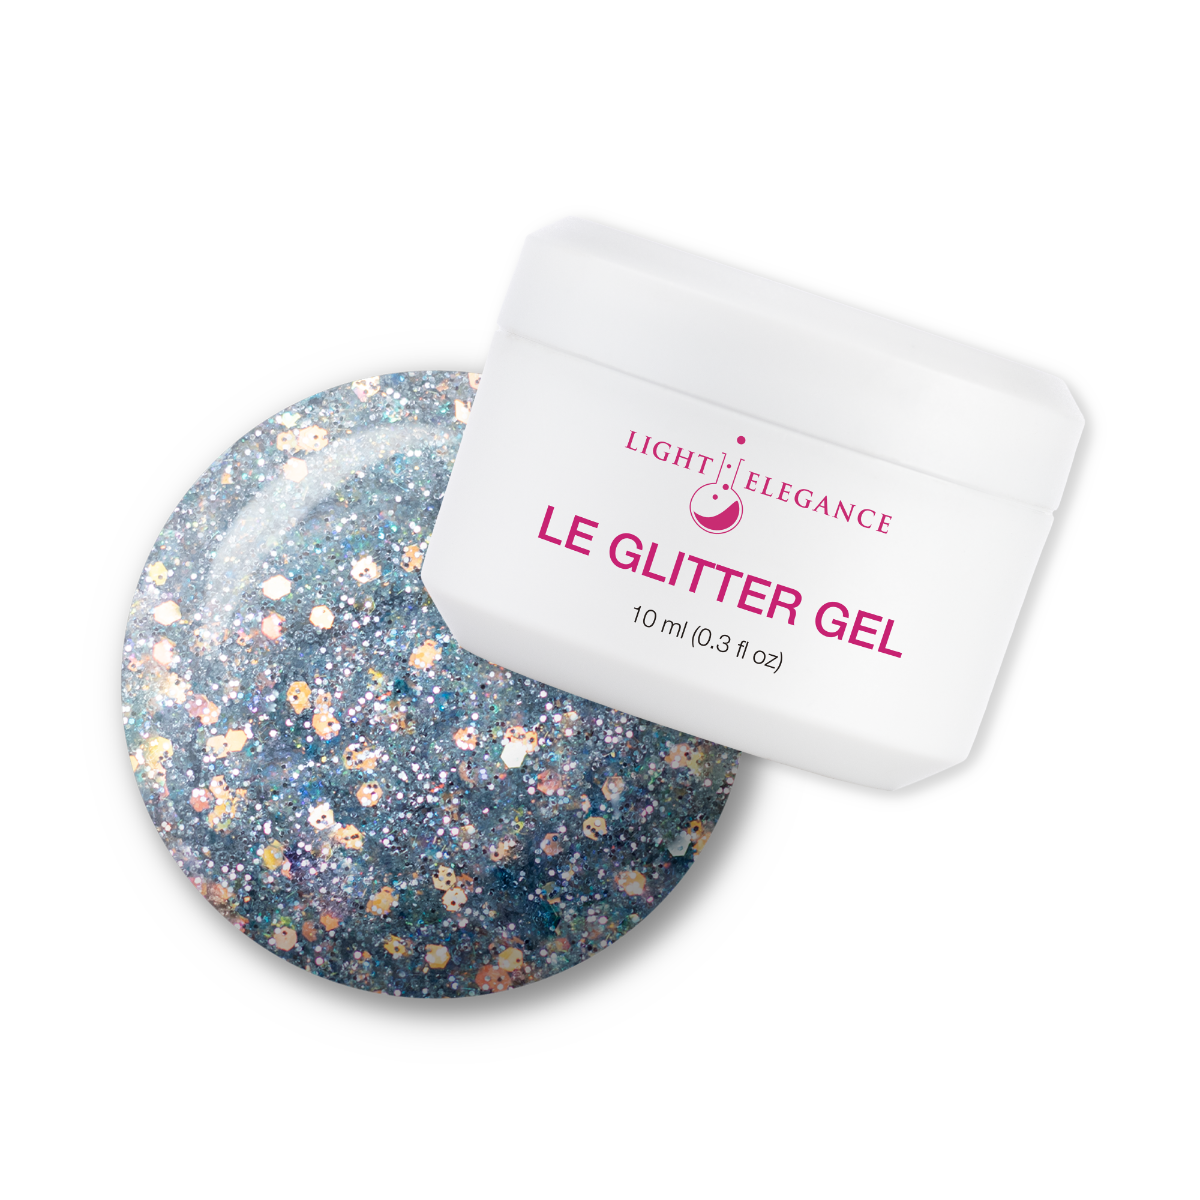 Light Elegance Glitter Gel - #Radiant :: New Packaging - Creata Beauty - Professional Beauty Products